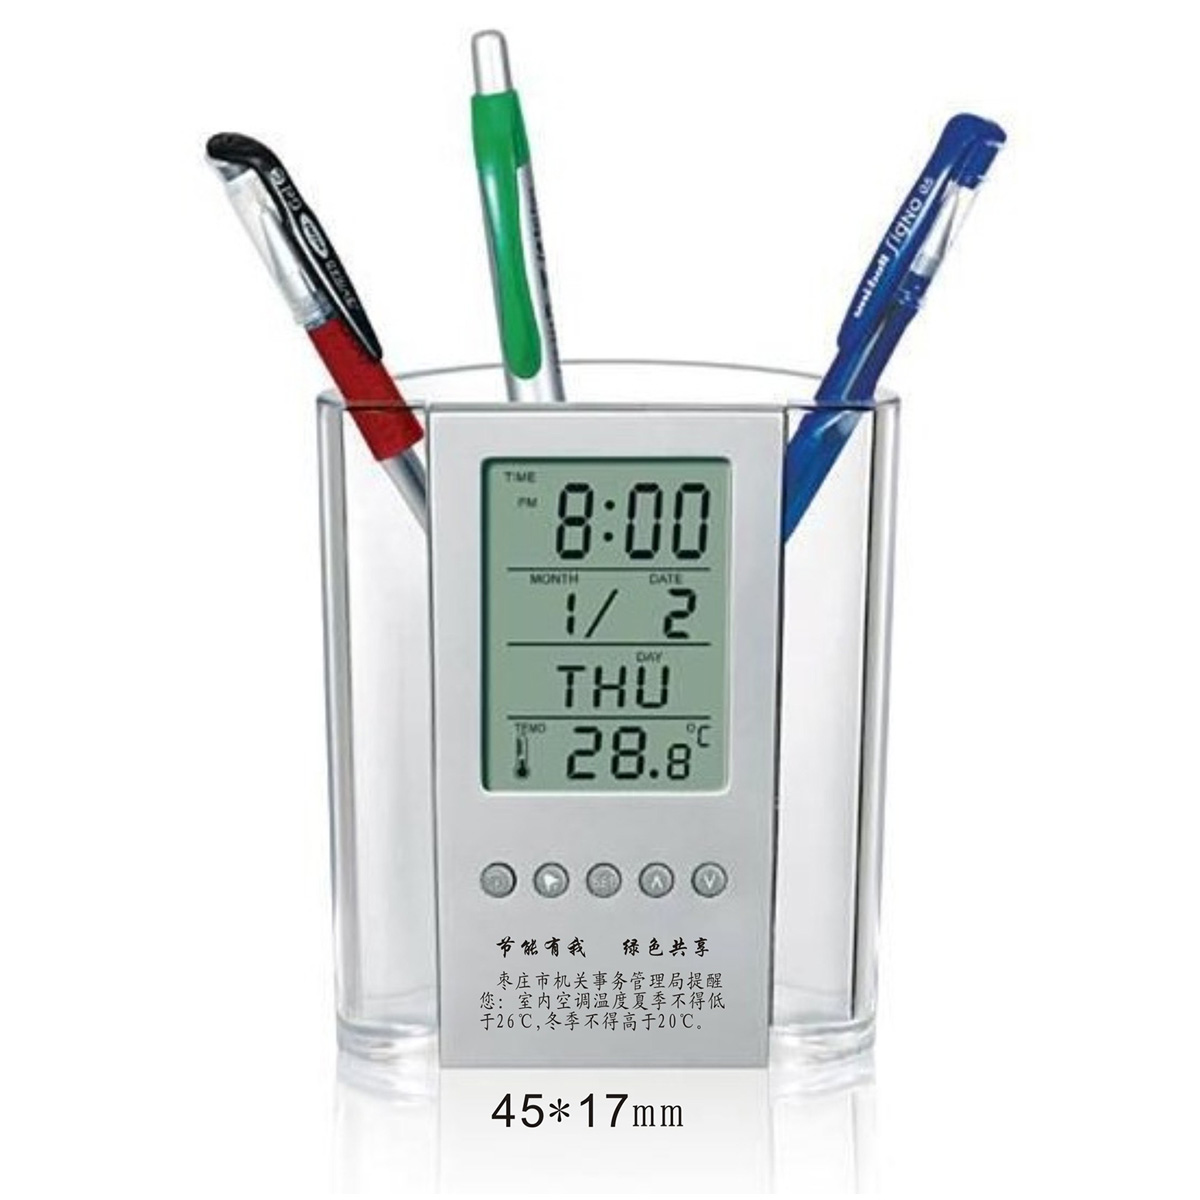 

Digital Timer Temperature Thermometer Screen Alarm Olock Calendar PenHolder Case